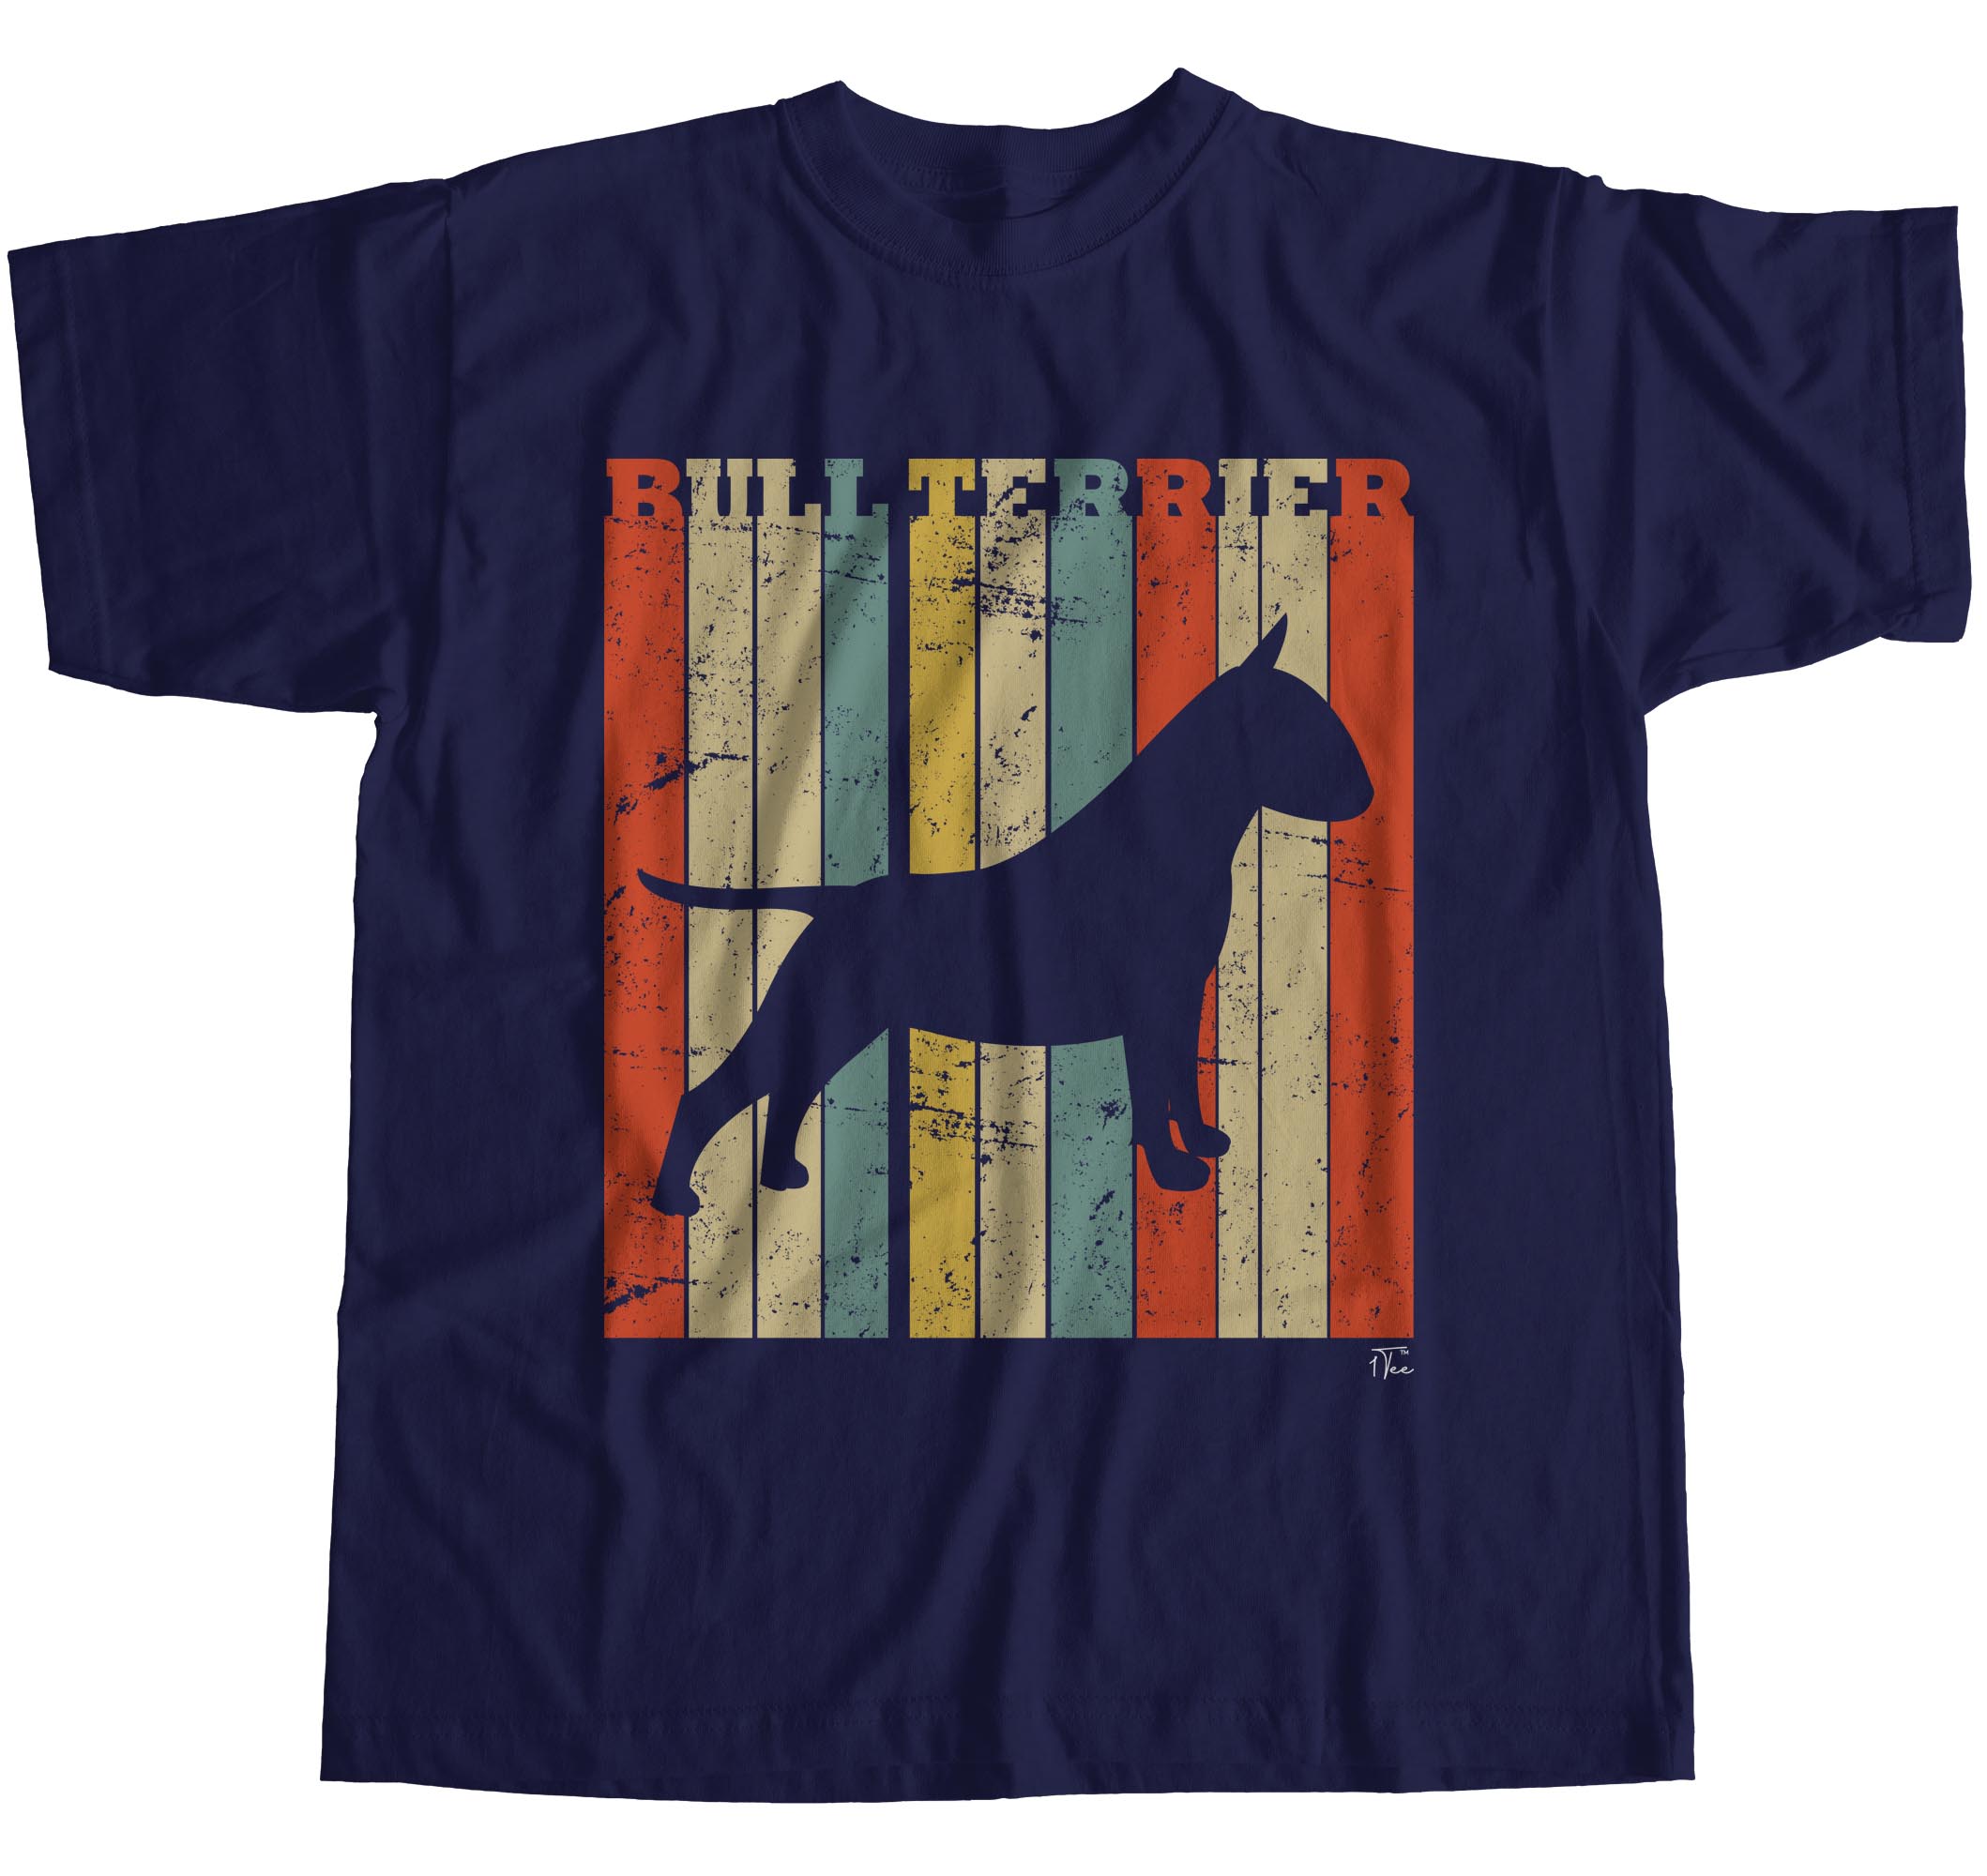 1Tee Mens Westie Dog Breed Colourful Retro T-Shirt